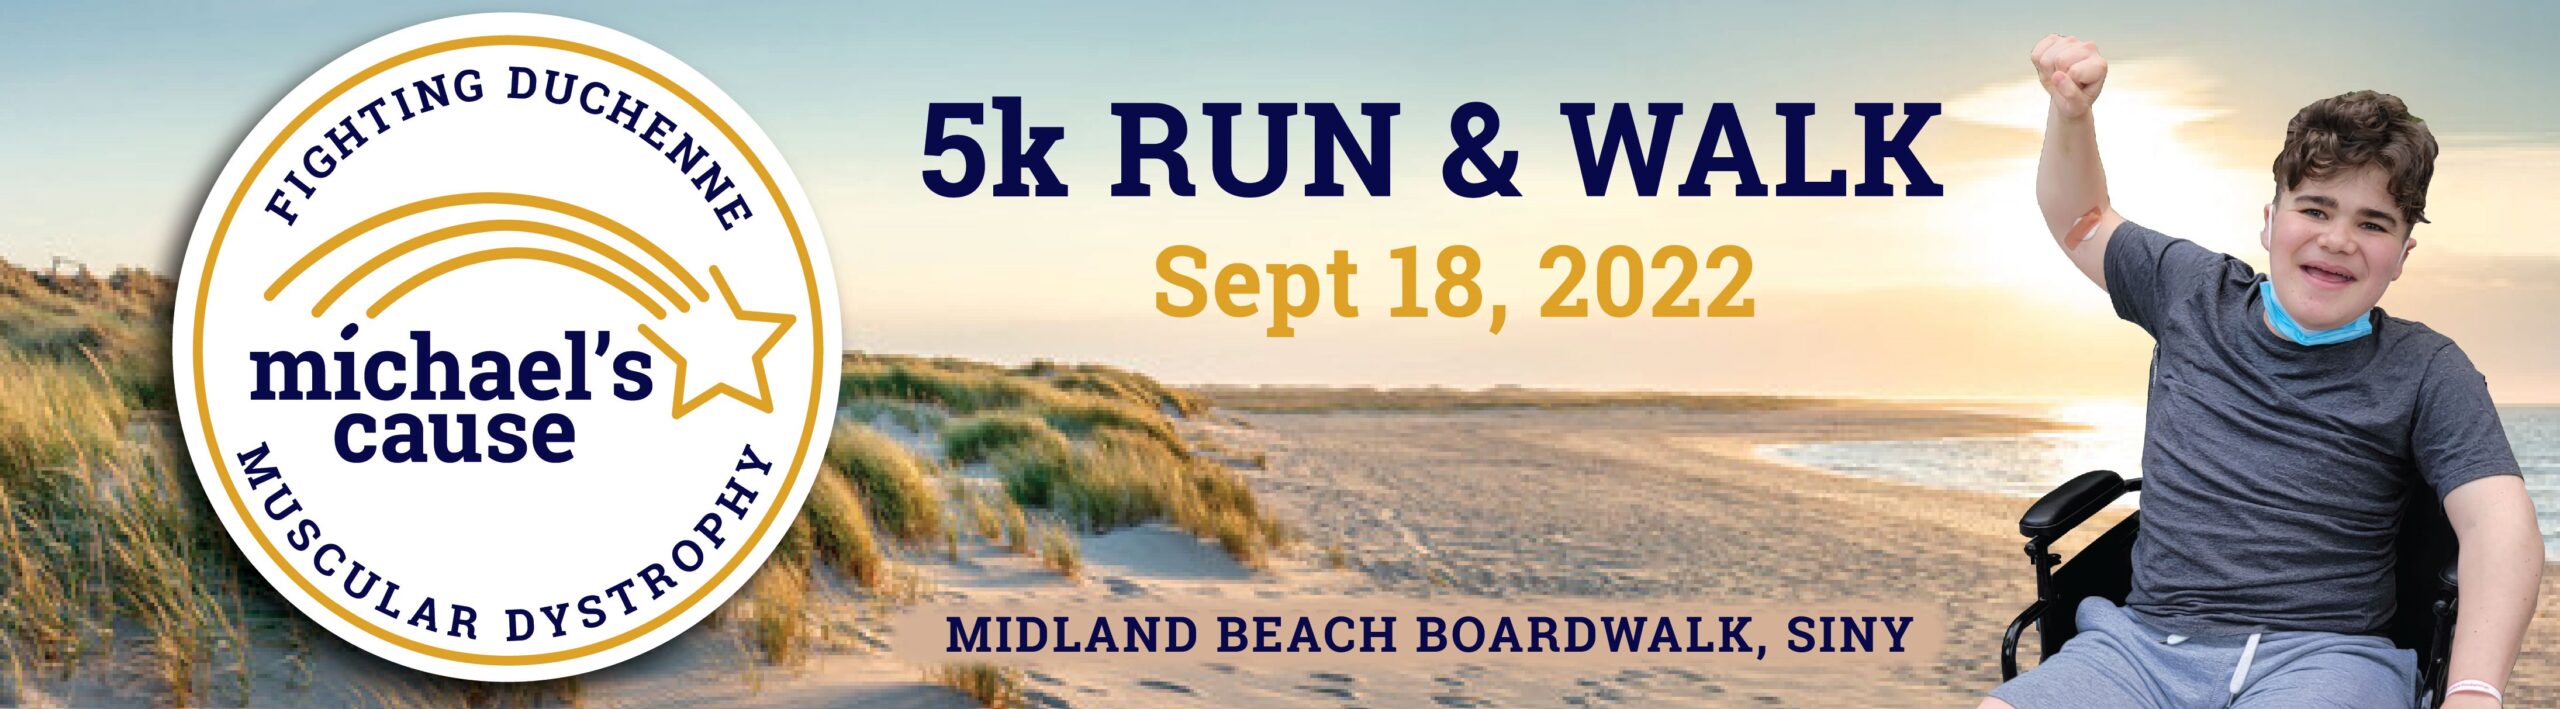 Michael's Cause - 5k Run & Walk. September 18, 2022